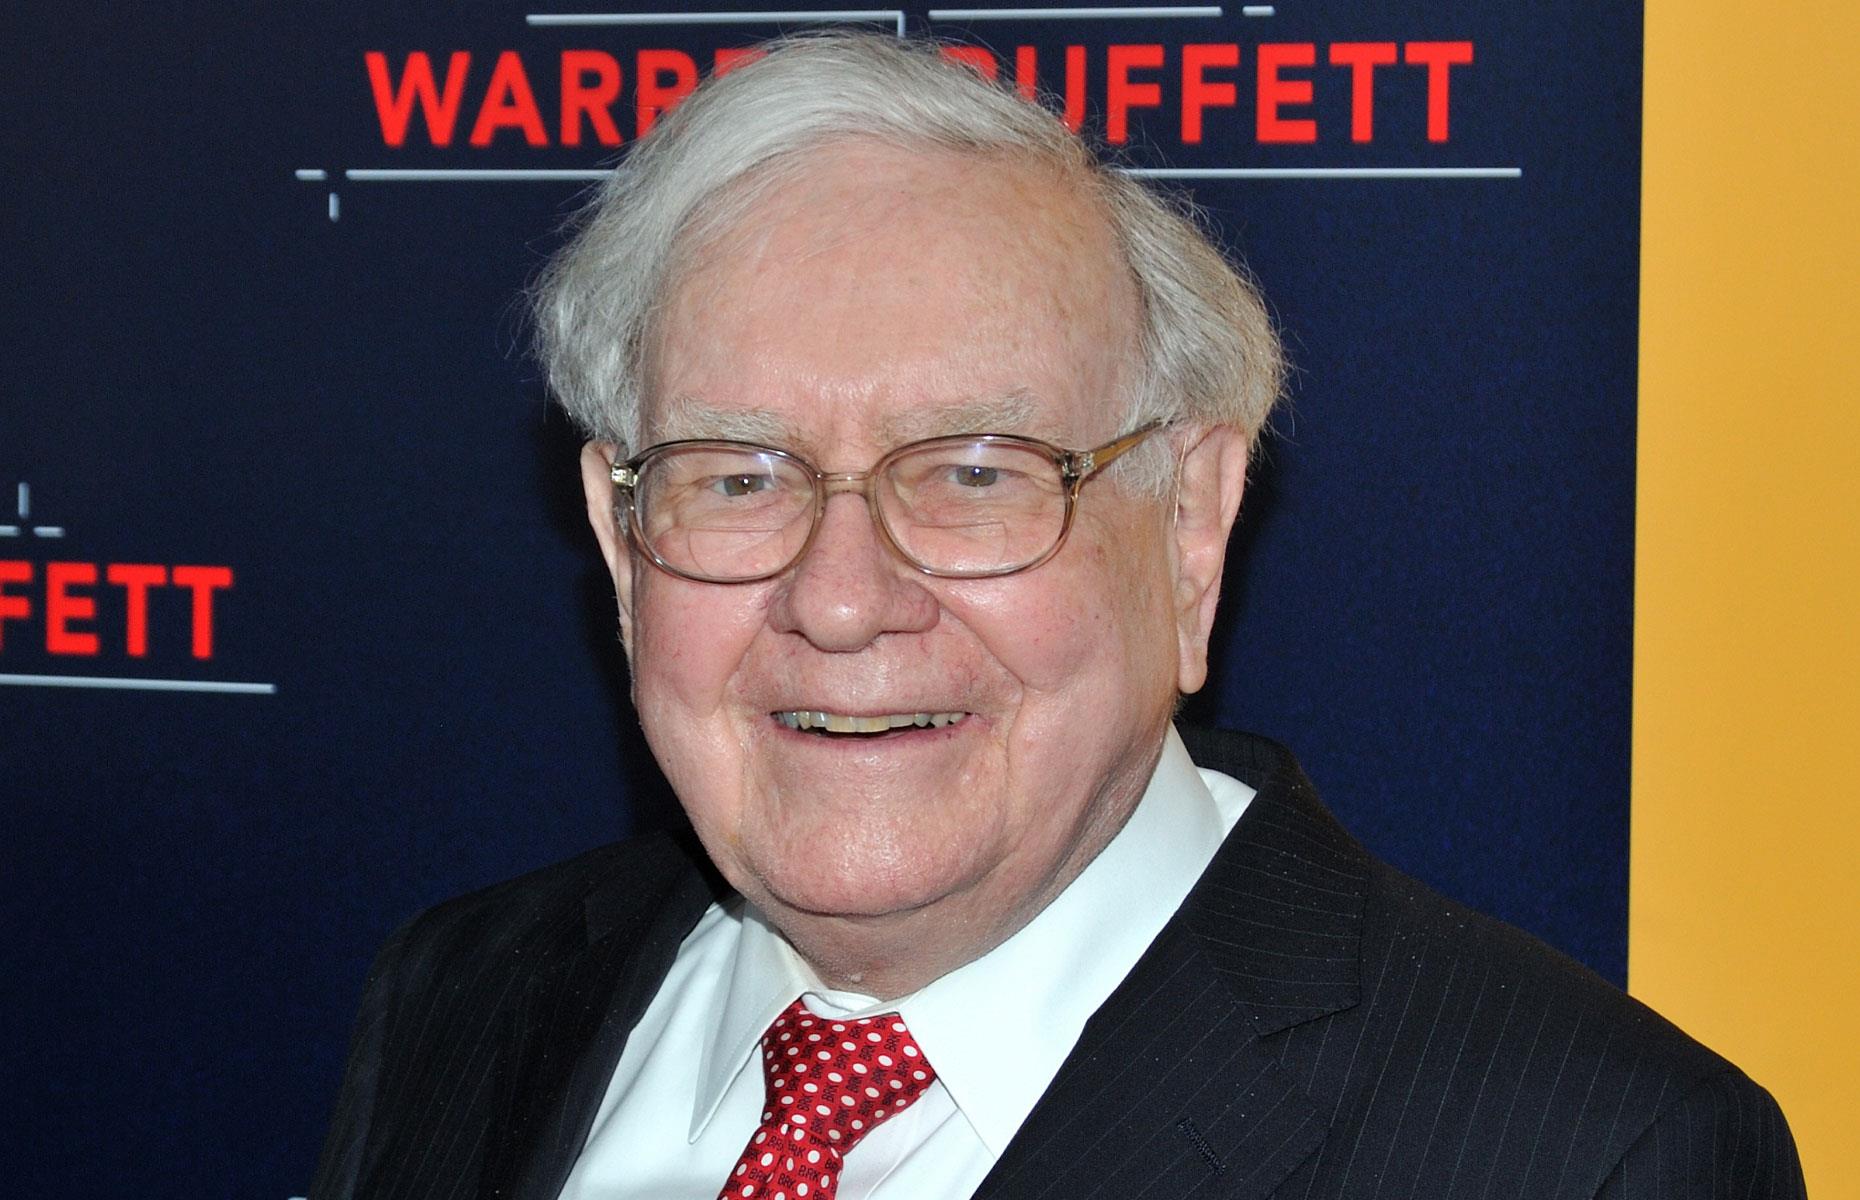 Warren Buffett, net worth: $114.9 billion (£84bn)